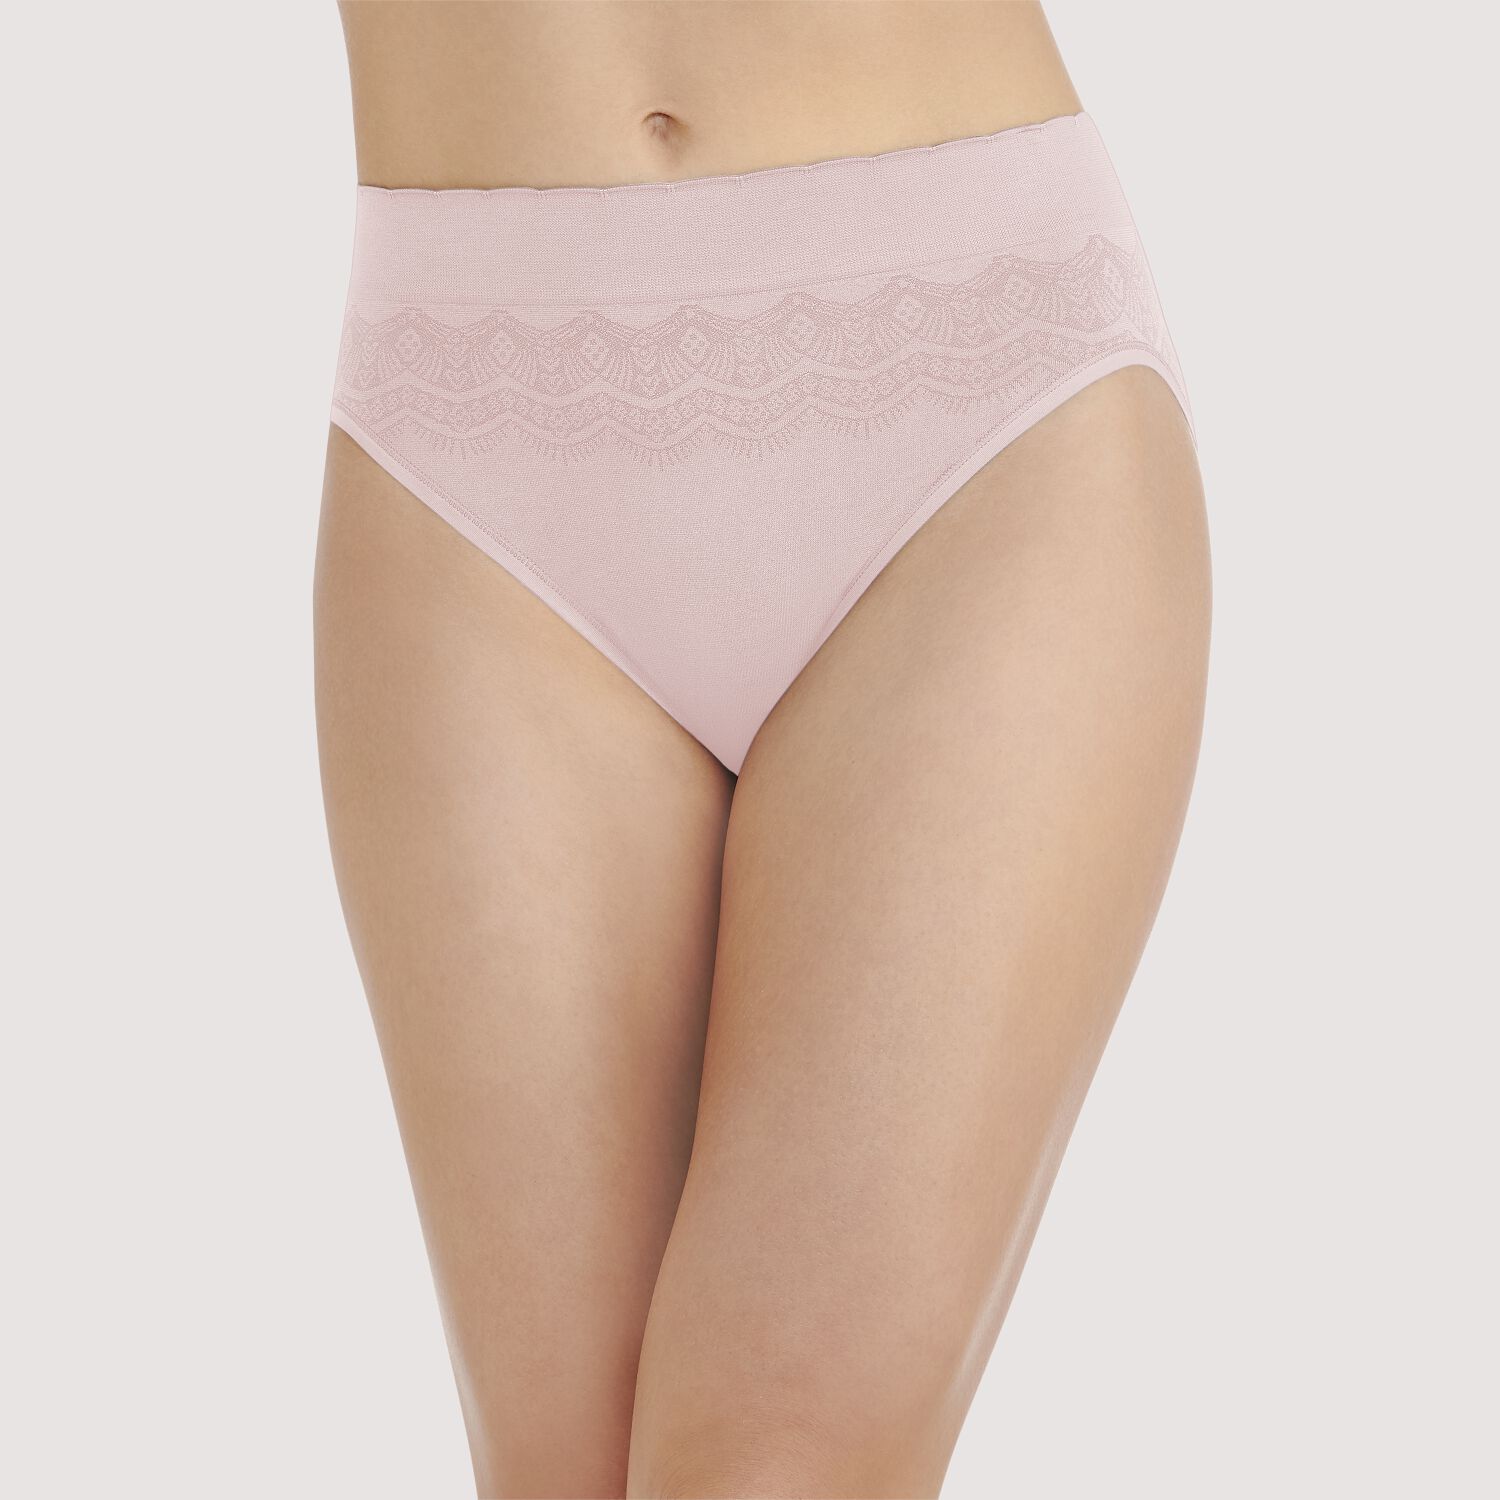 Womens Panties Lace Trim Seamless Sheer Panties Briefs Cotton Crotch  Lingerie For Women